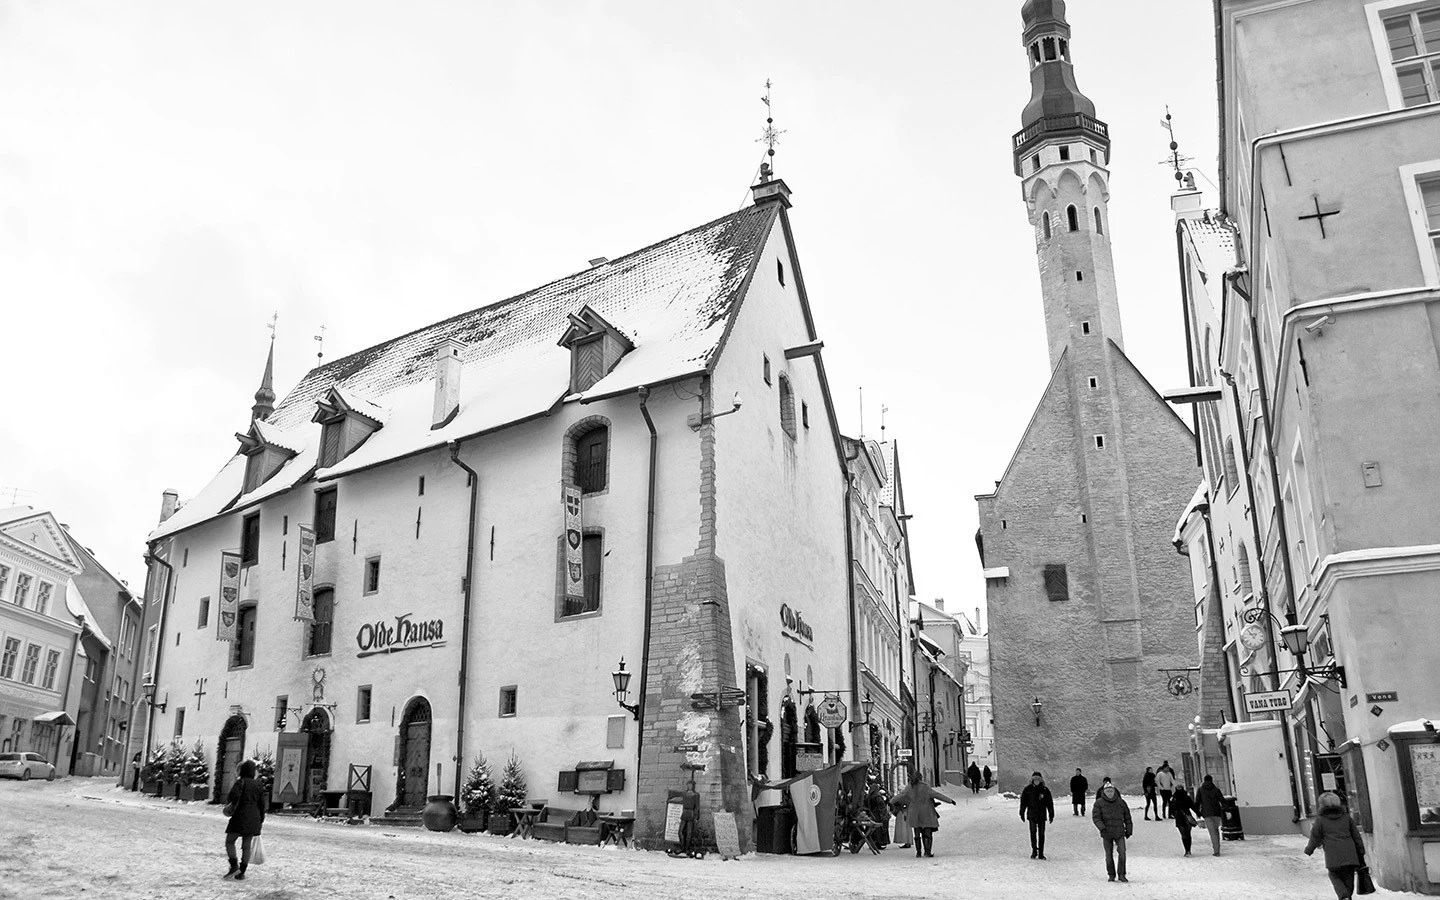 Olde Hansa medieval restaurant in the Old Town of Tallinn